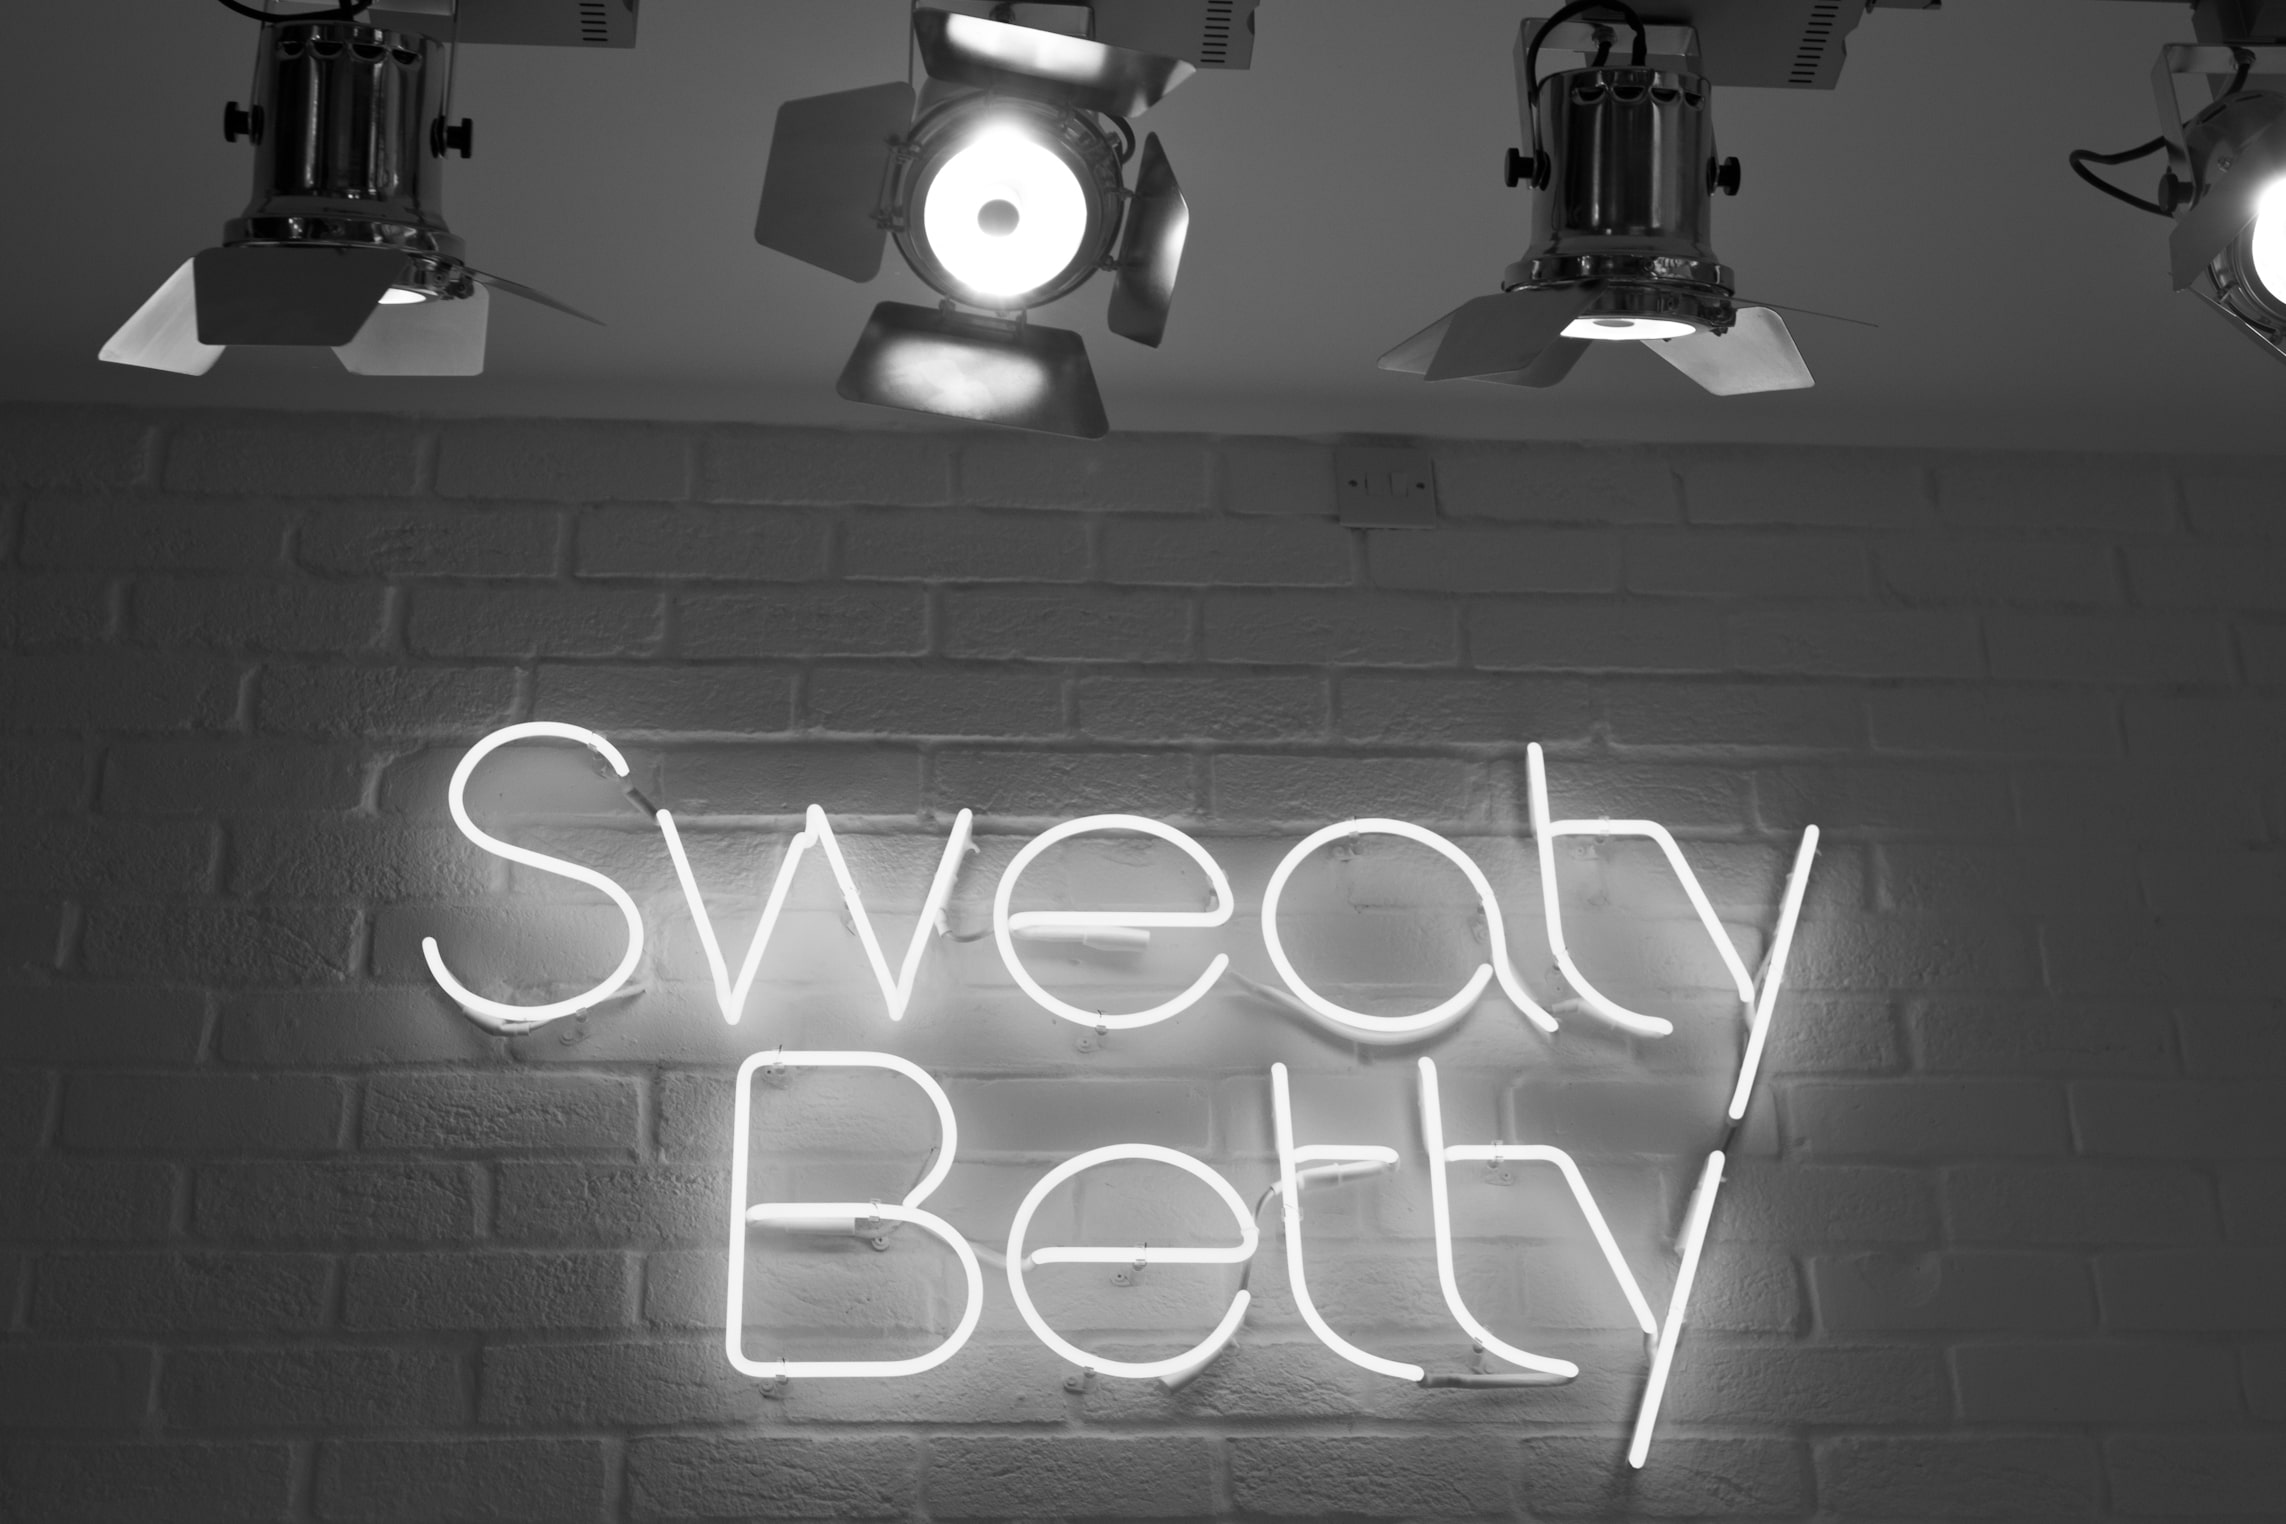 Sweaty-Betty-Shoreditch-11-min.jpg